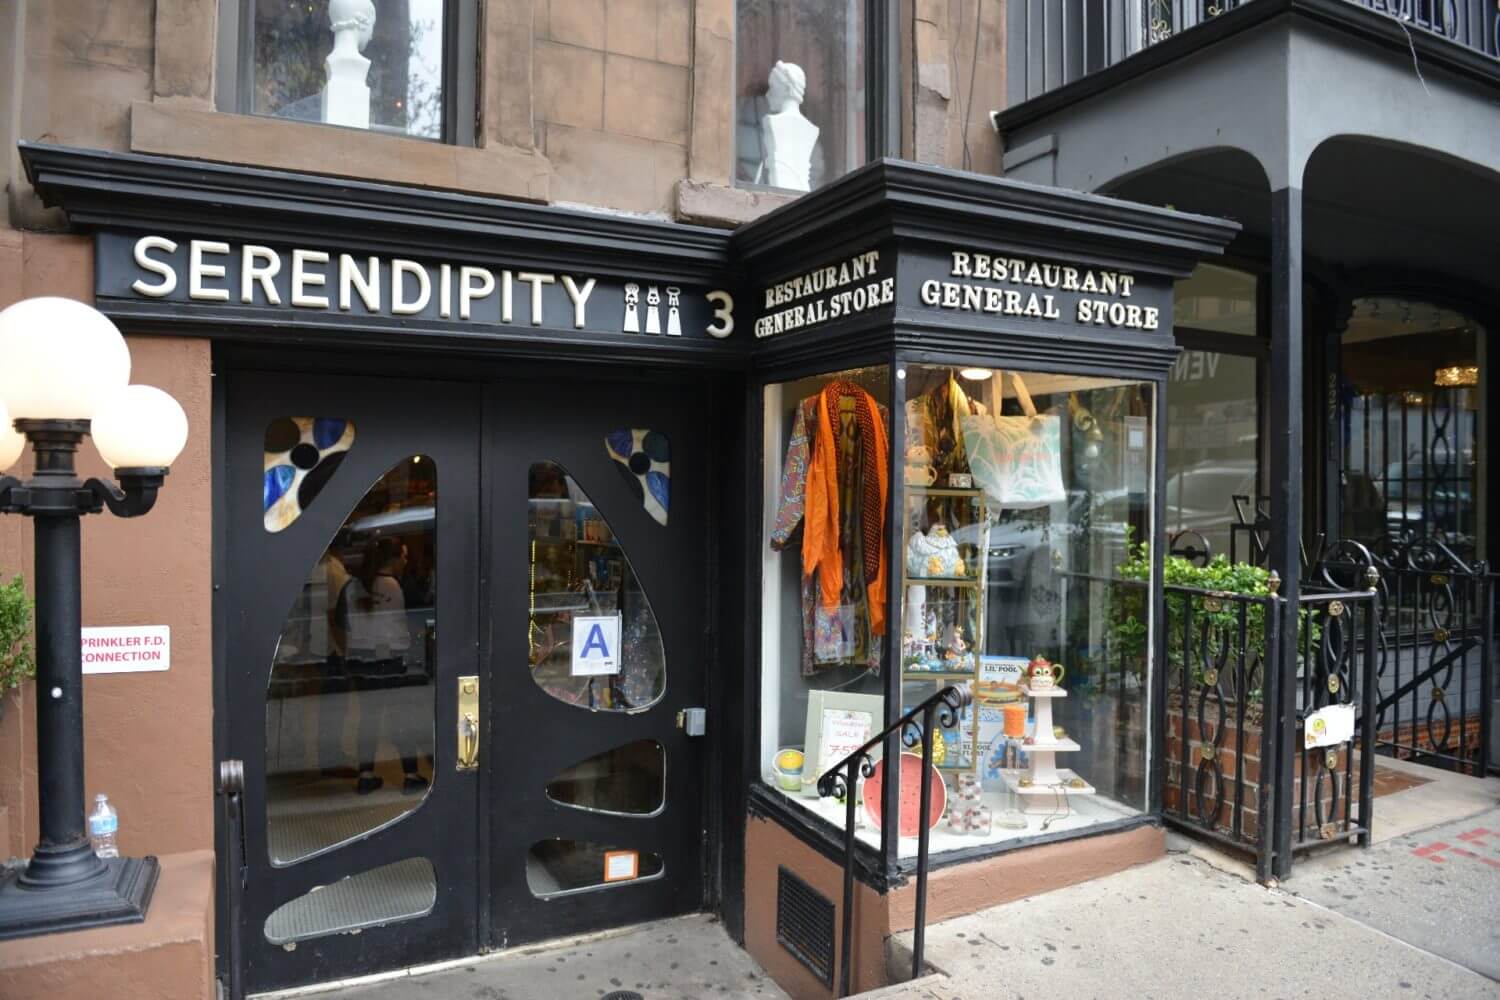 Top restaurants New York: Serendipity 3 - Photo credit: Fantrippers